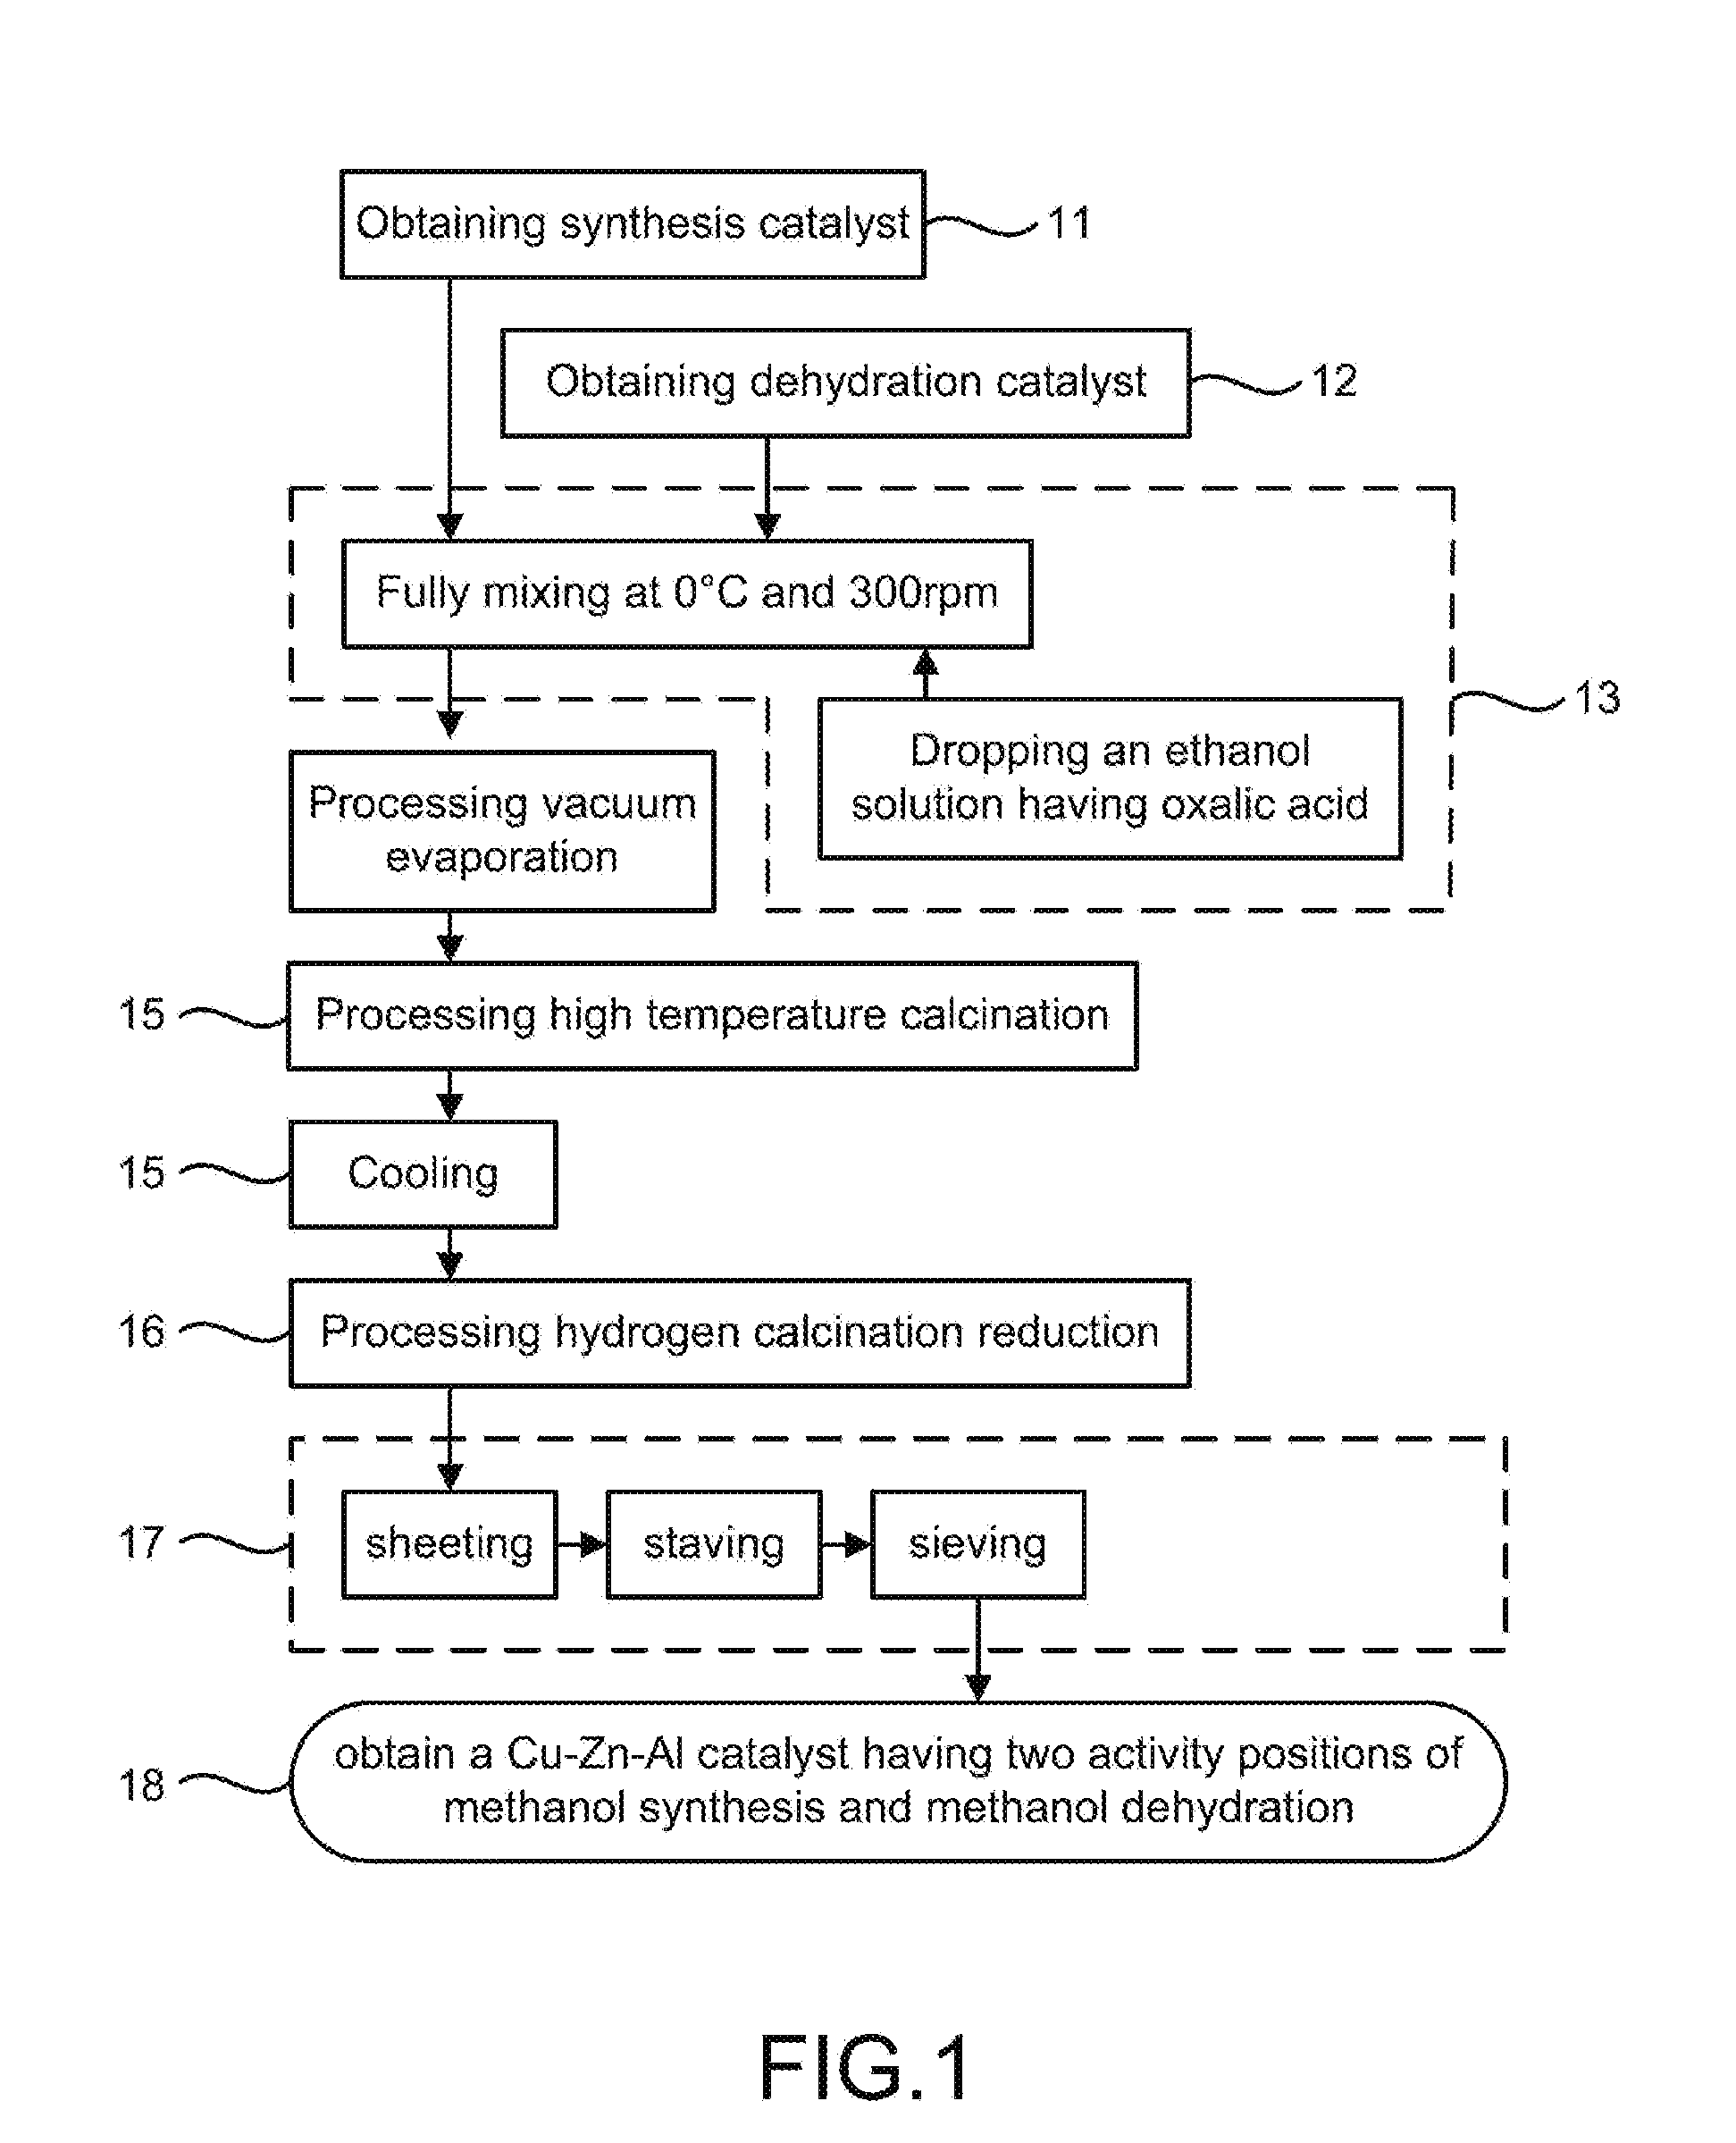 Method of Fabricating Cu-Zn-Al Catalyst for Producing Methanol and Dimethyl Ether